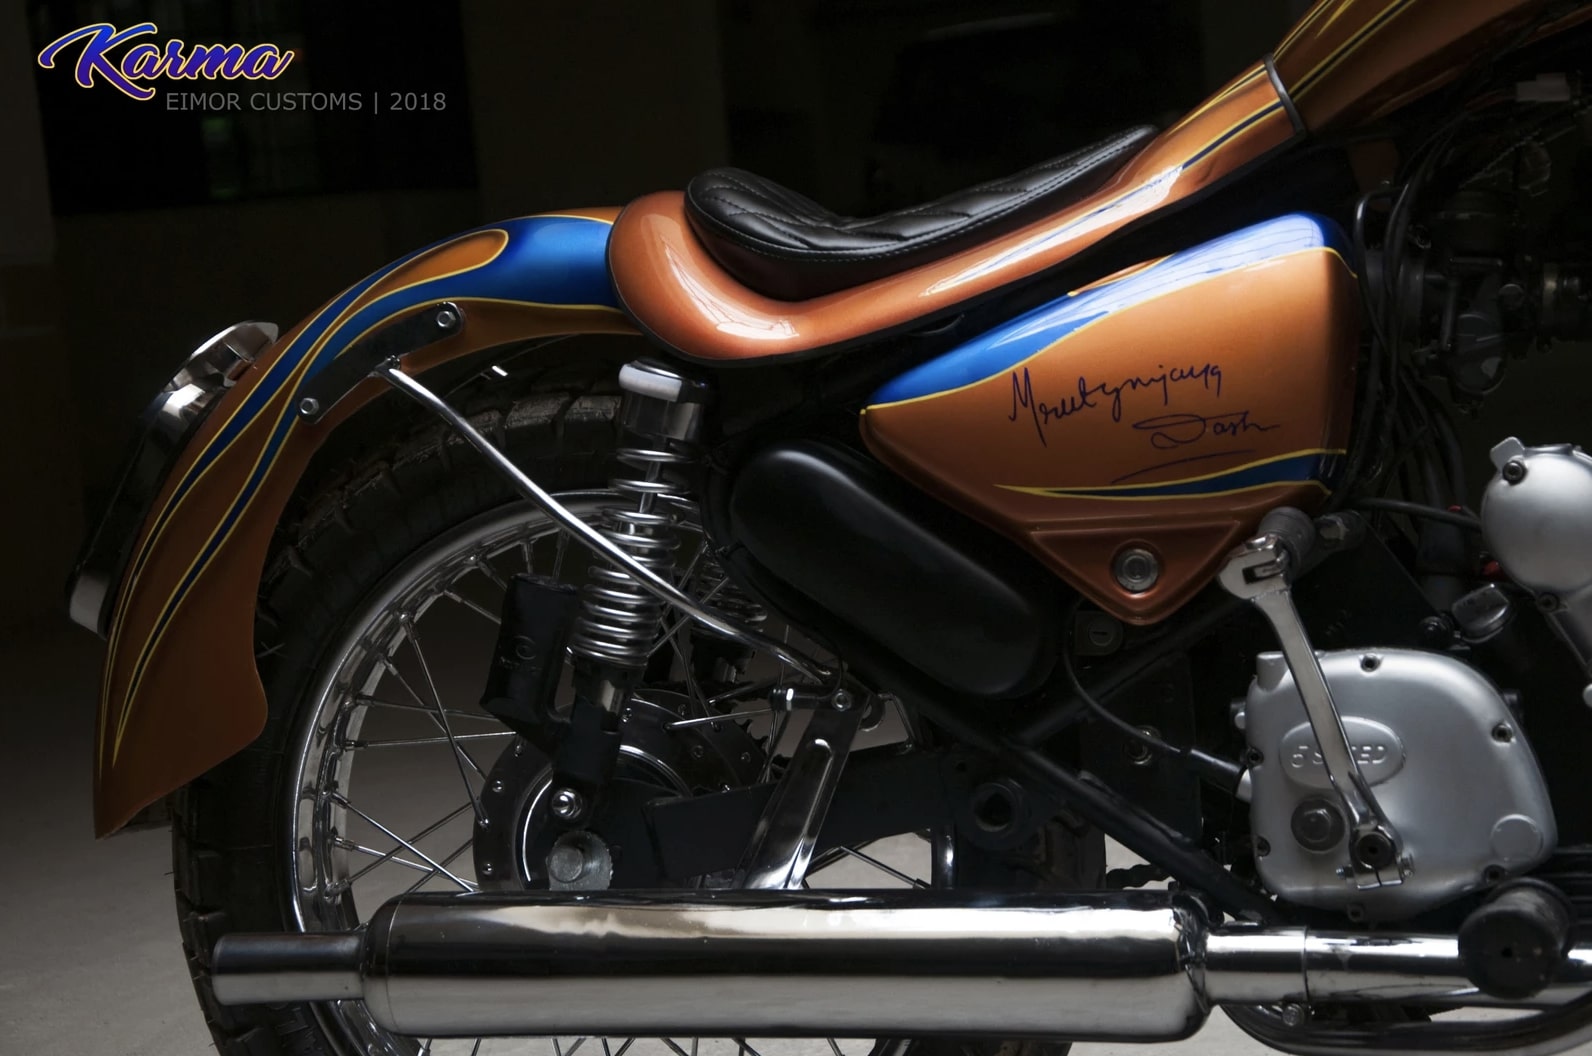 Meet Karma 350 - Based on the Royal Enfield Thunderbird Motorcycle - portrait